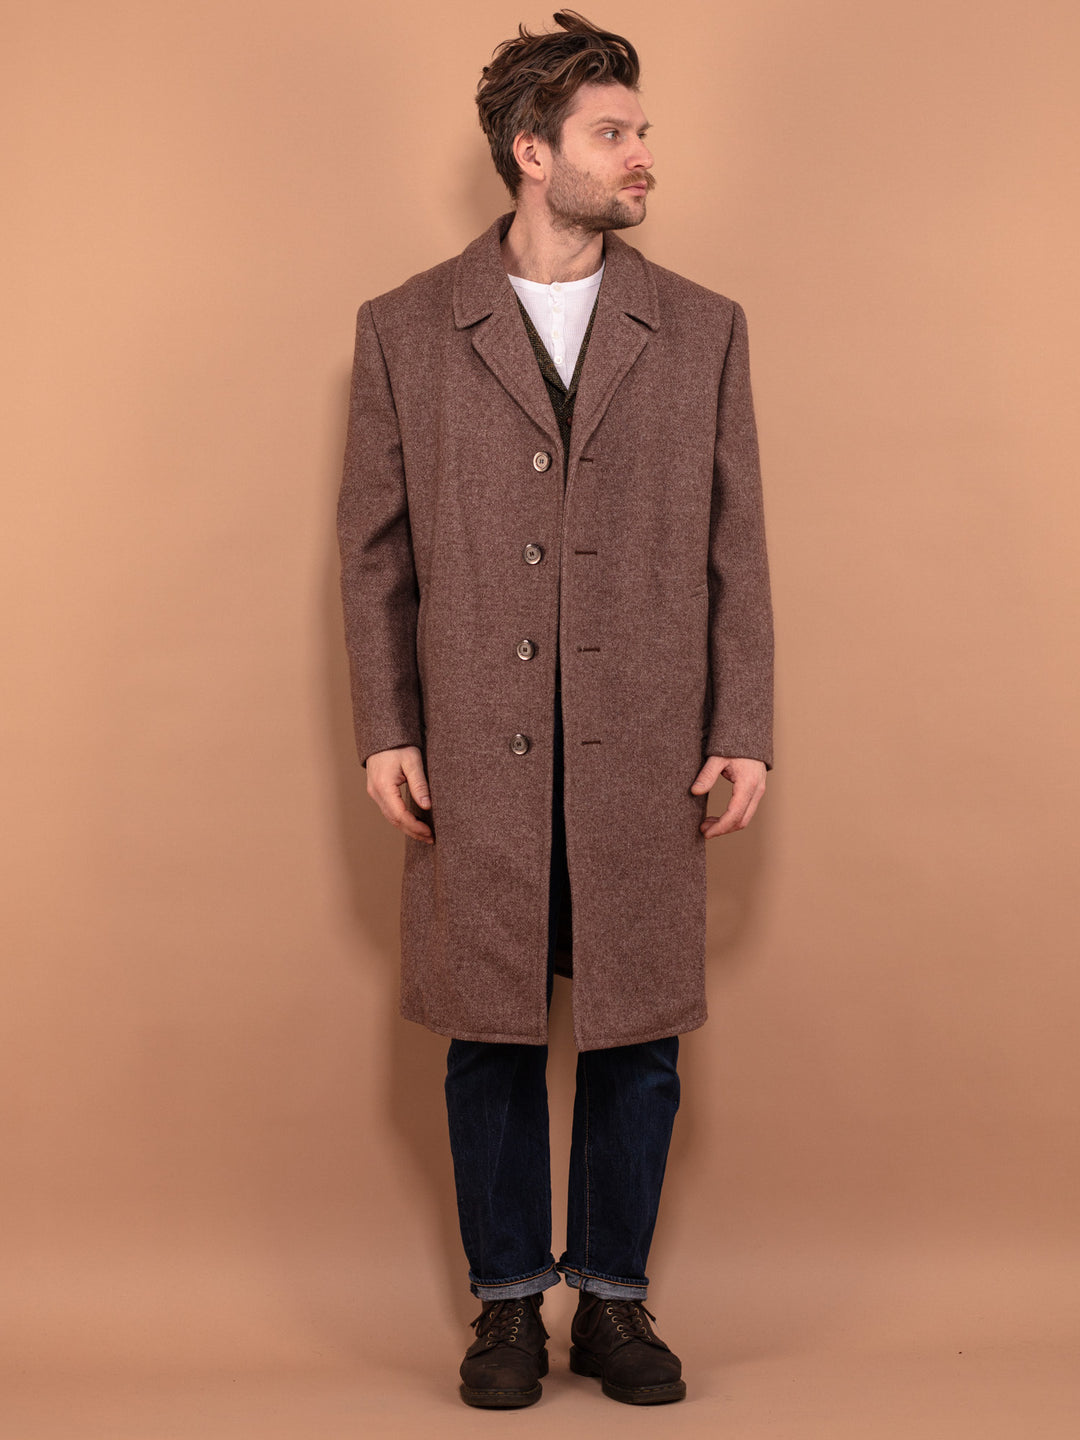 Long Brown Wool Coat, Size Large L, Vintage Woolen Coat, Pure New Wool Overcoat, Mens Clothing, Spring Clothing, Timeless Coat, BetaMenswear